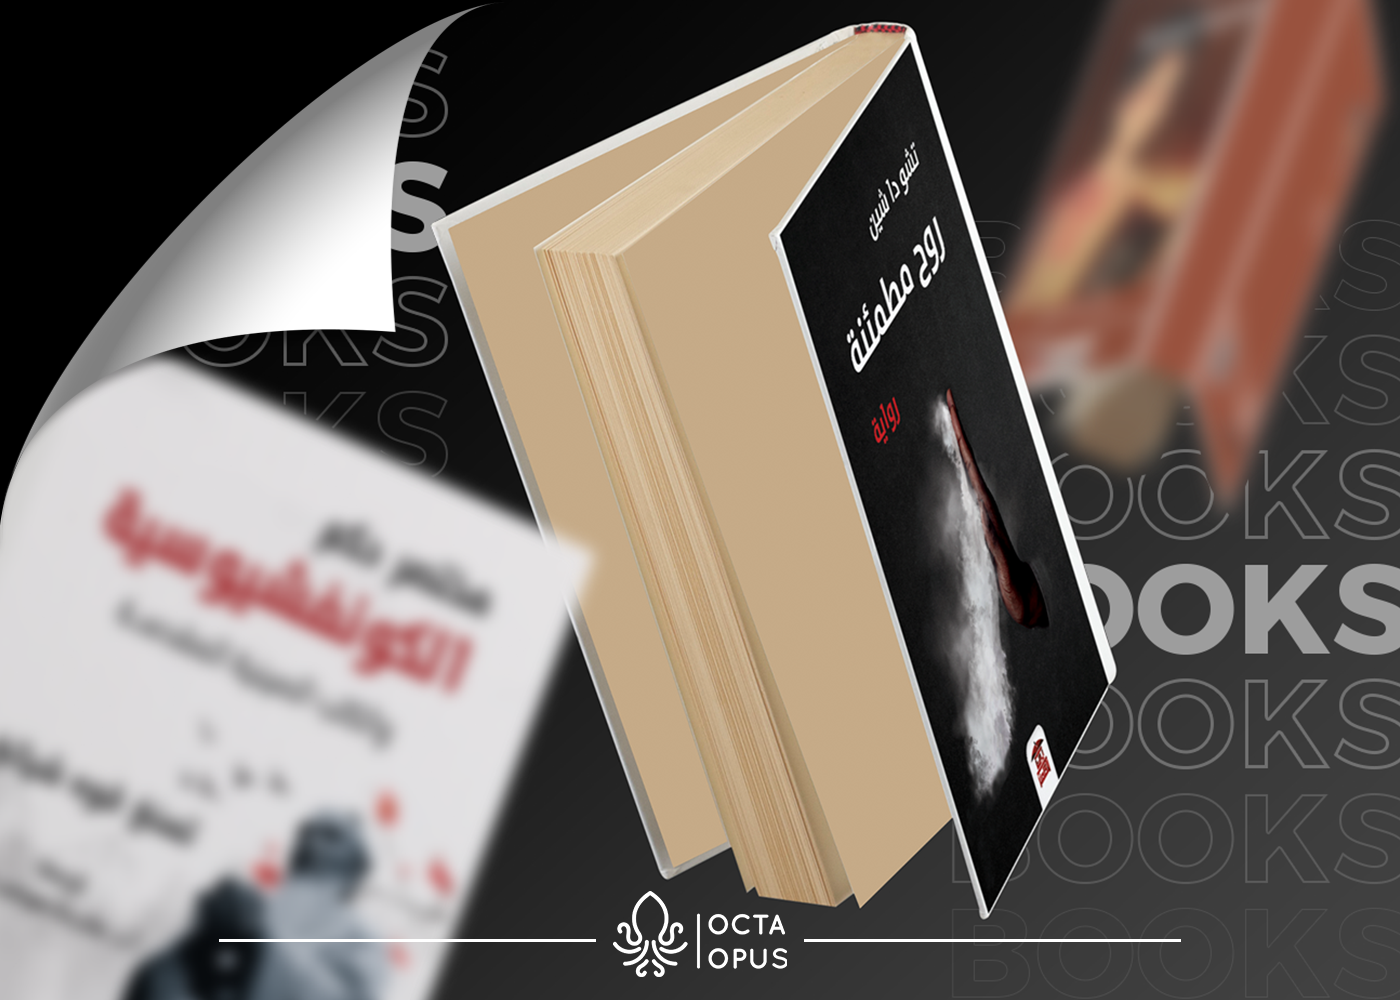 agency Behance book cover Book Fair books cairo design egypt graphicdesign printout